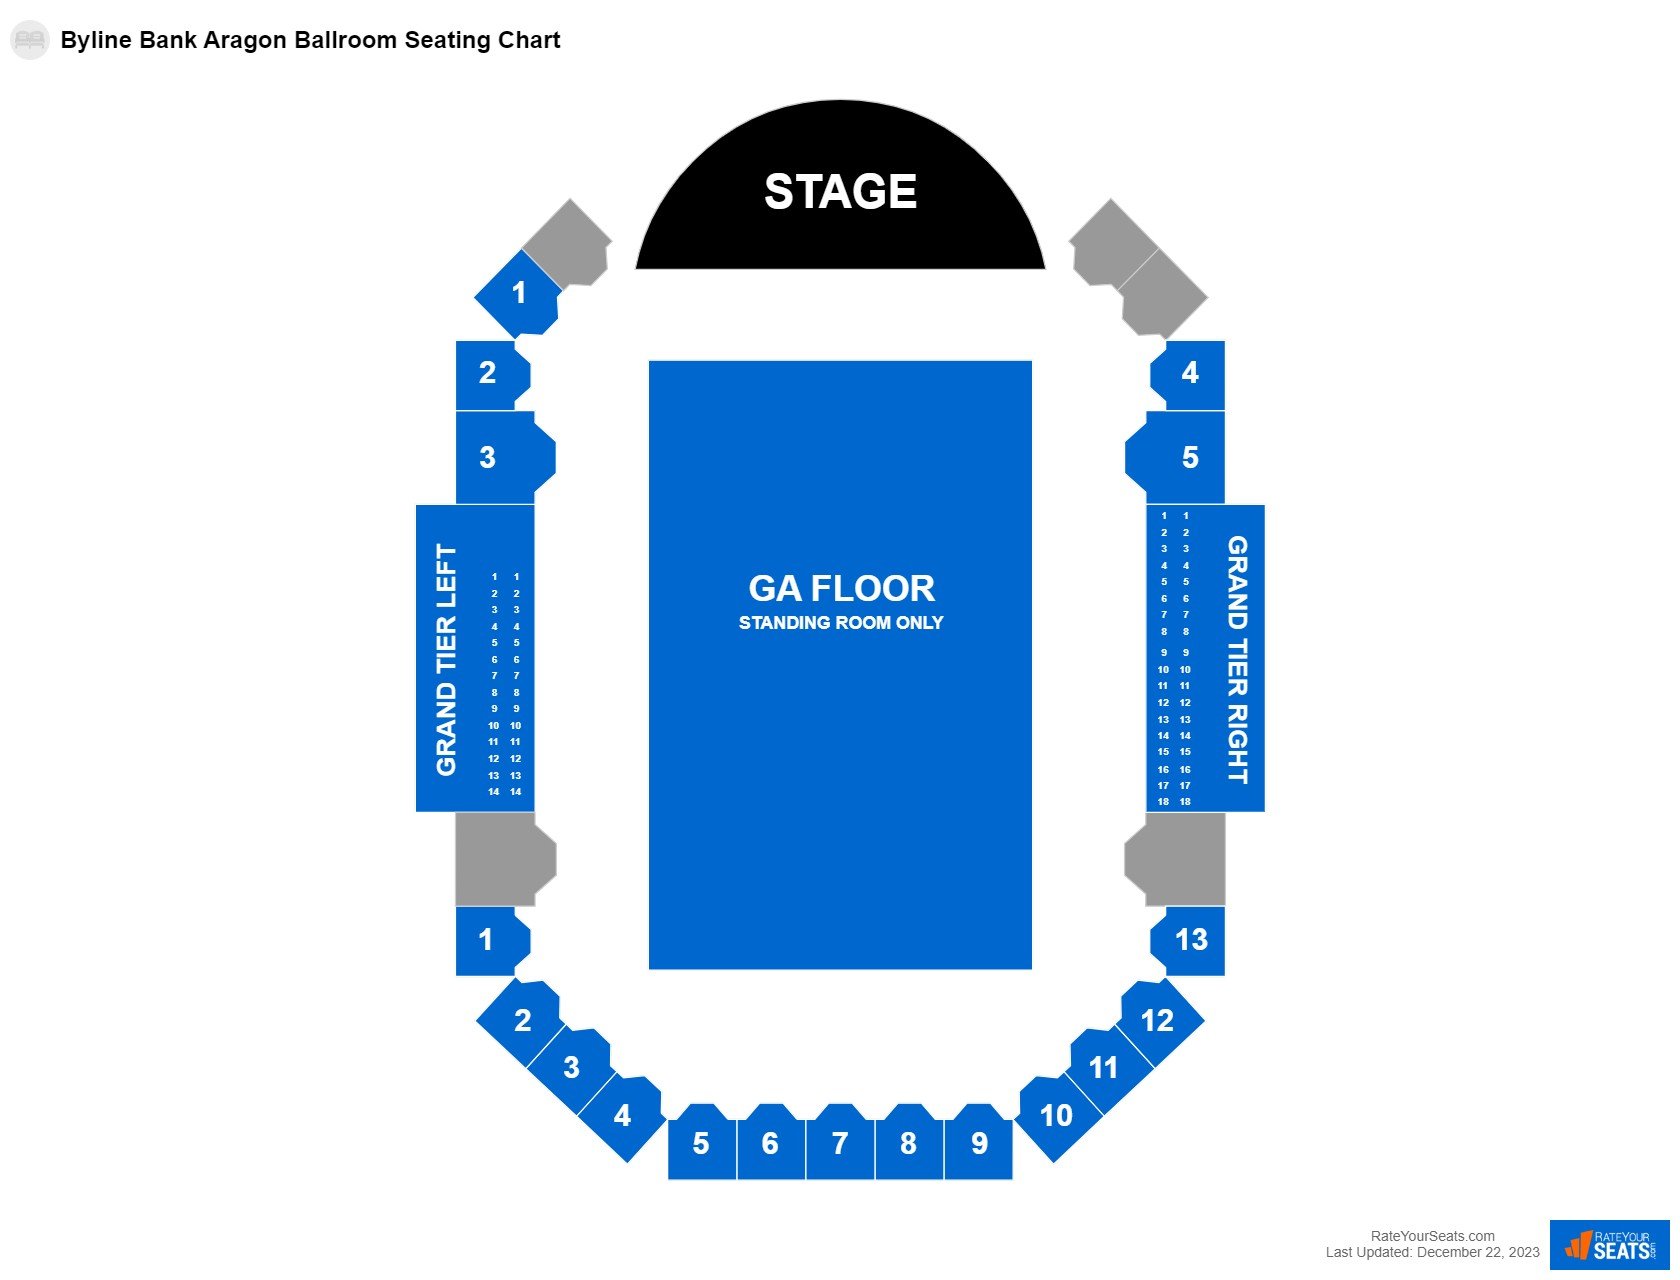 Concert seating chart at Byline Bank Aragon Ballroom